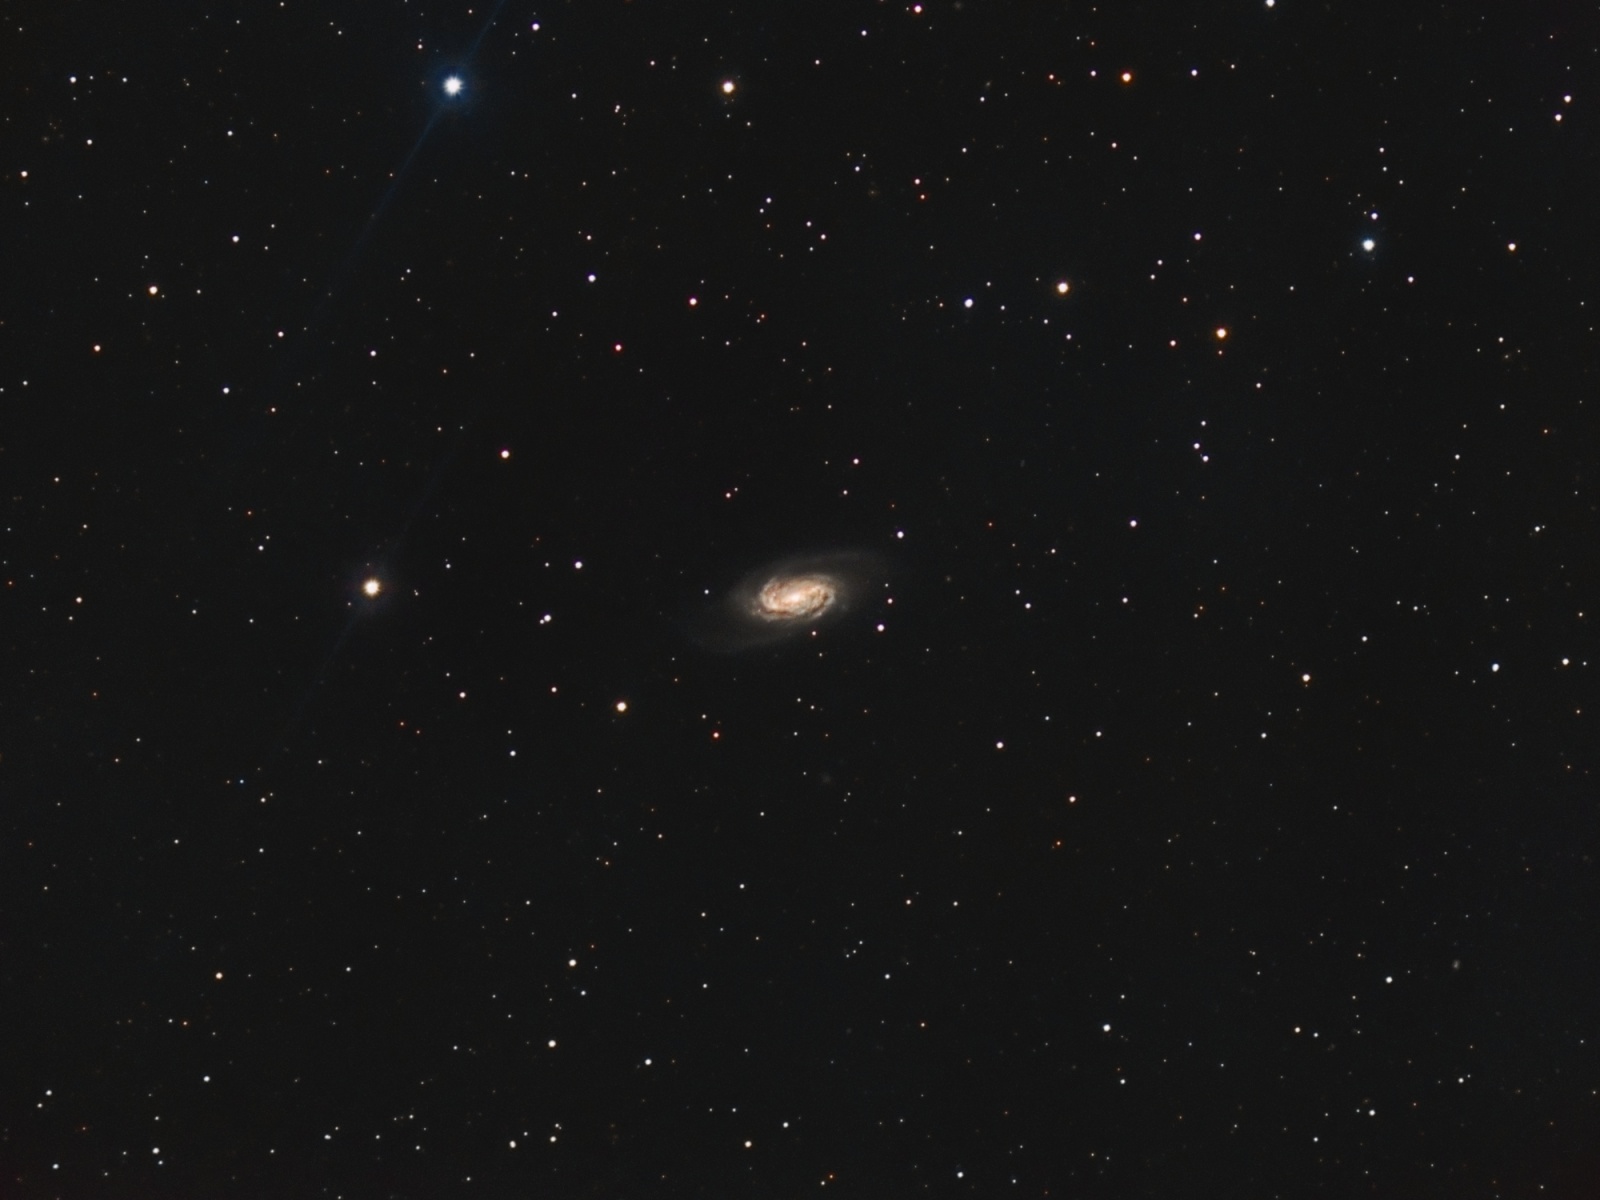 NGC2903_crop_4000_3000_final_resize_2000_1500.thumb.jpg.a7fd0928f0e9daa6e041f7a6d3f58522.jpg